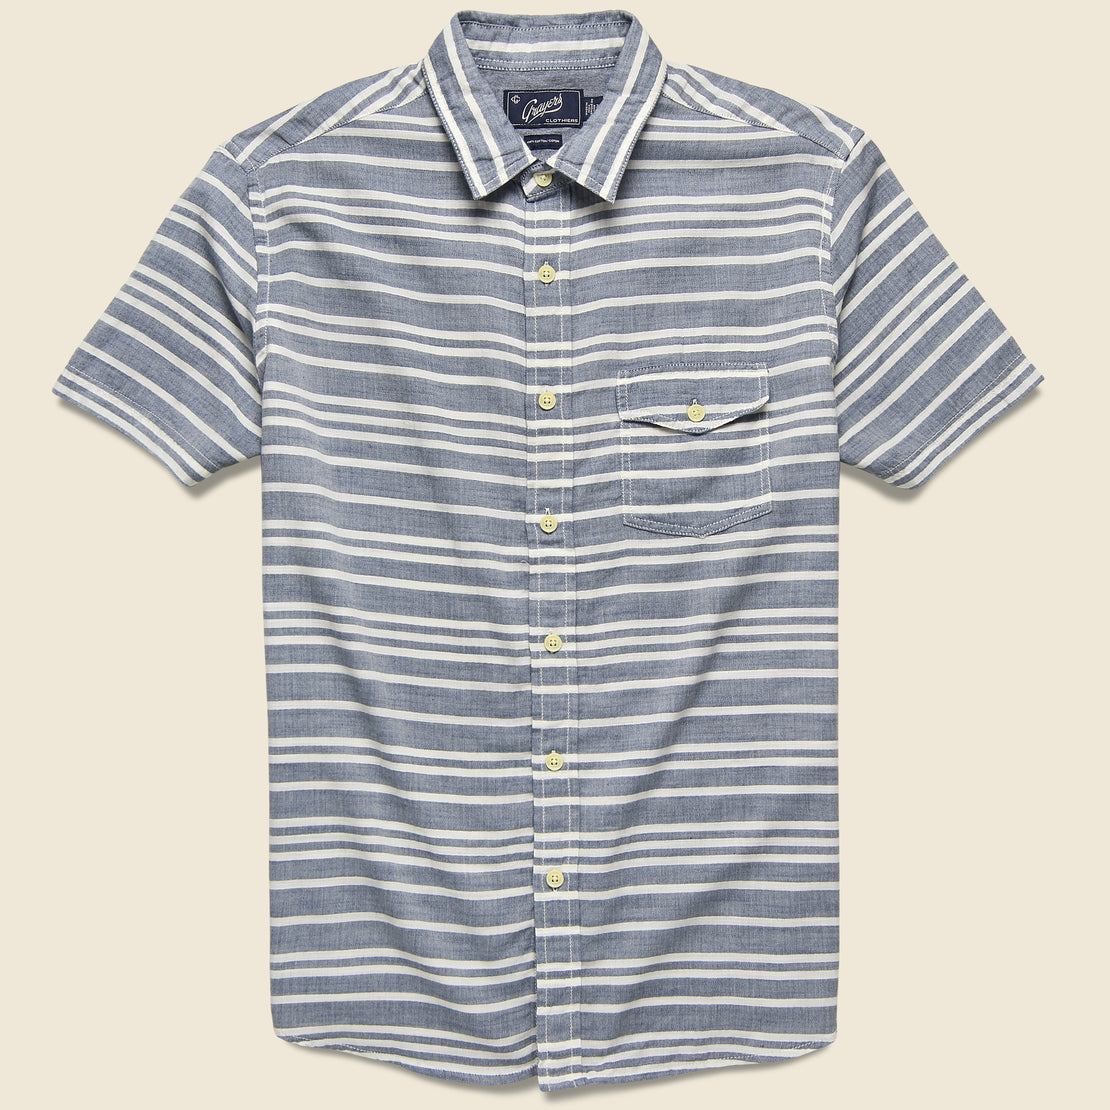 Grayers Trevor Horizontal Slub Twill Shirt - Navy/Cream